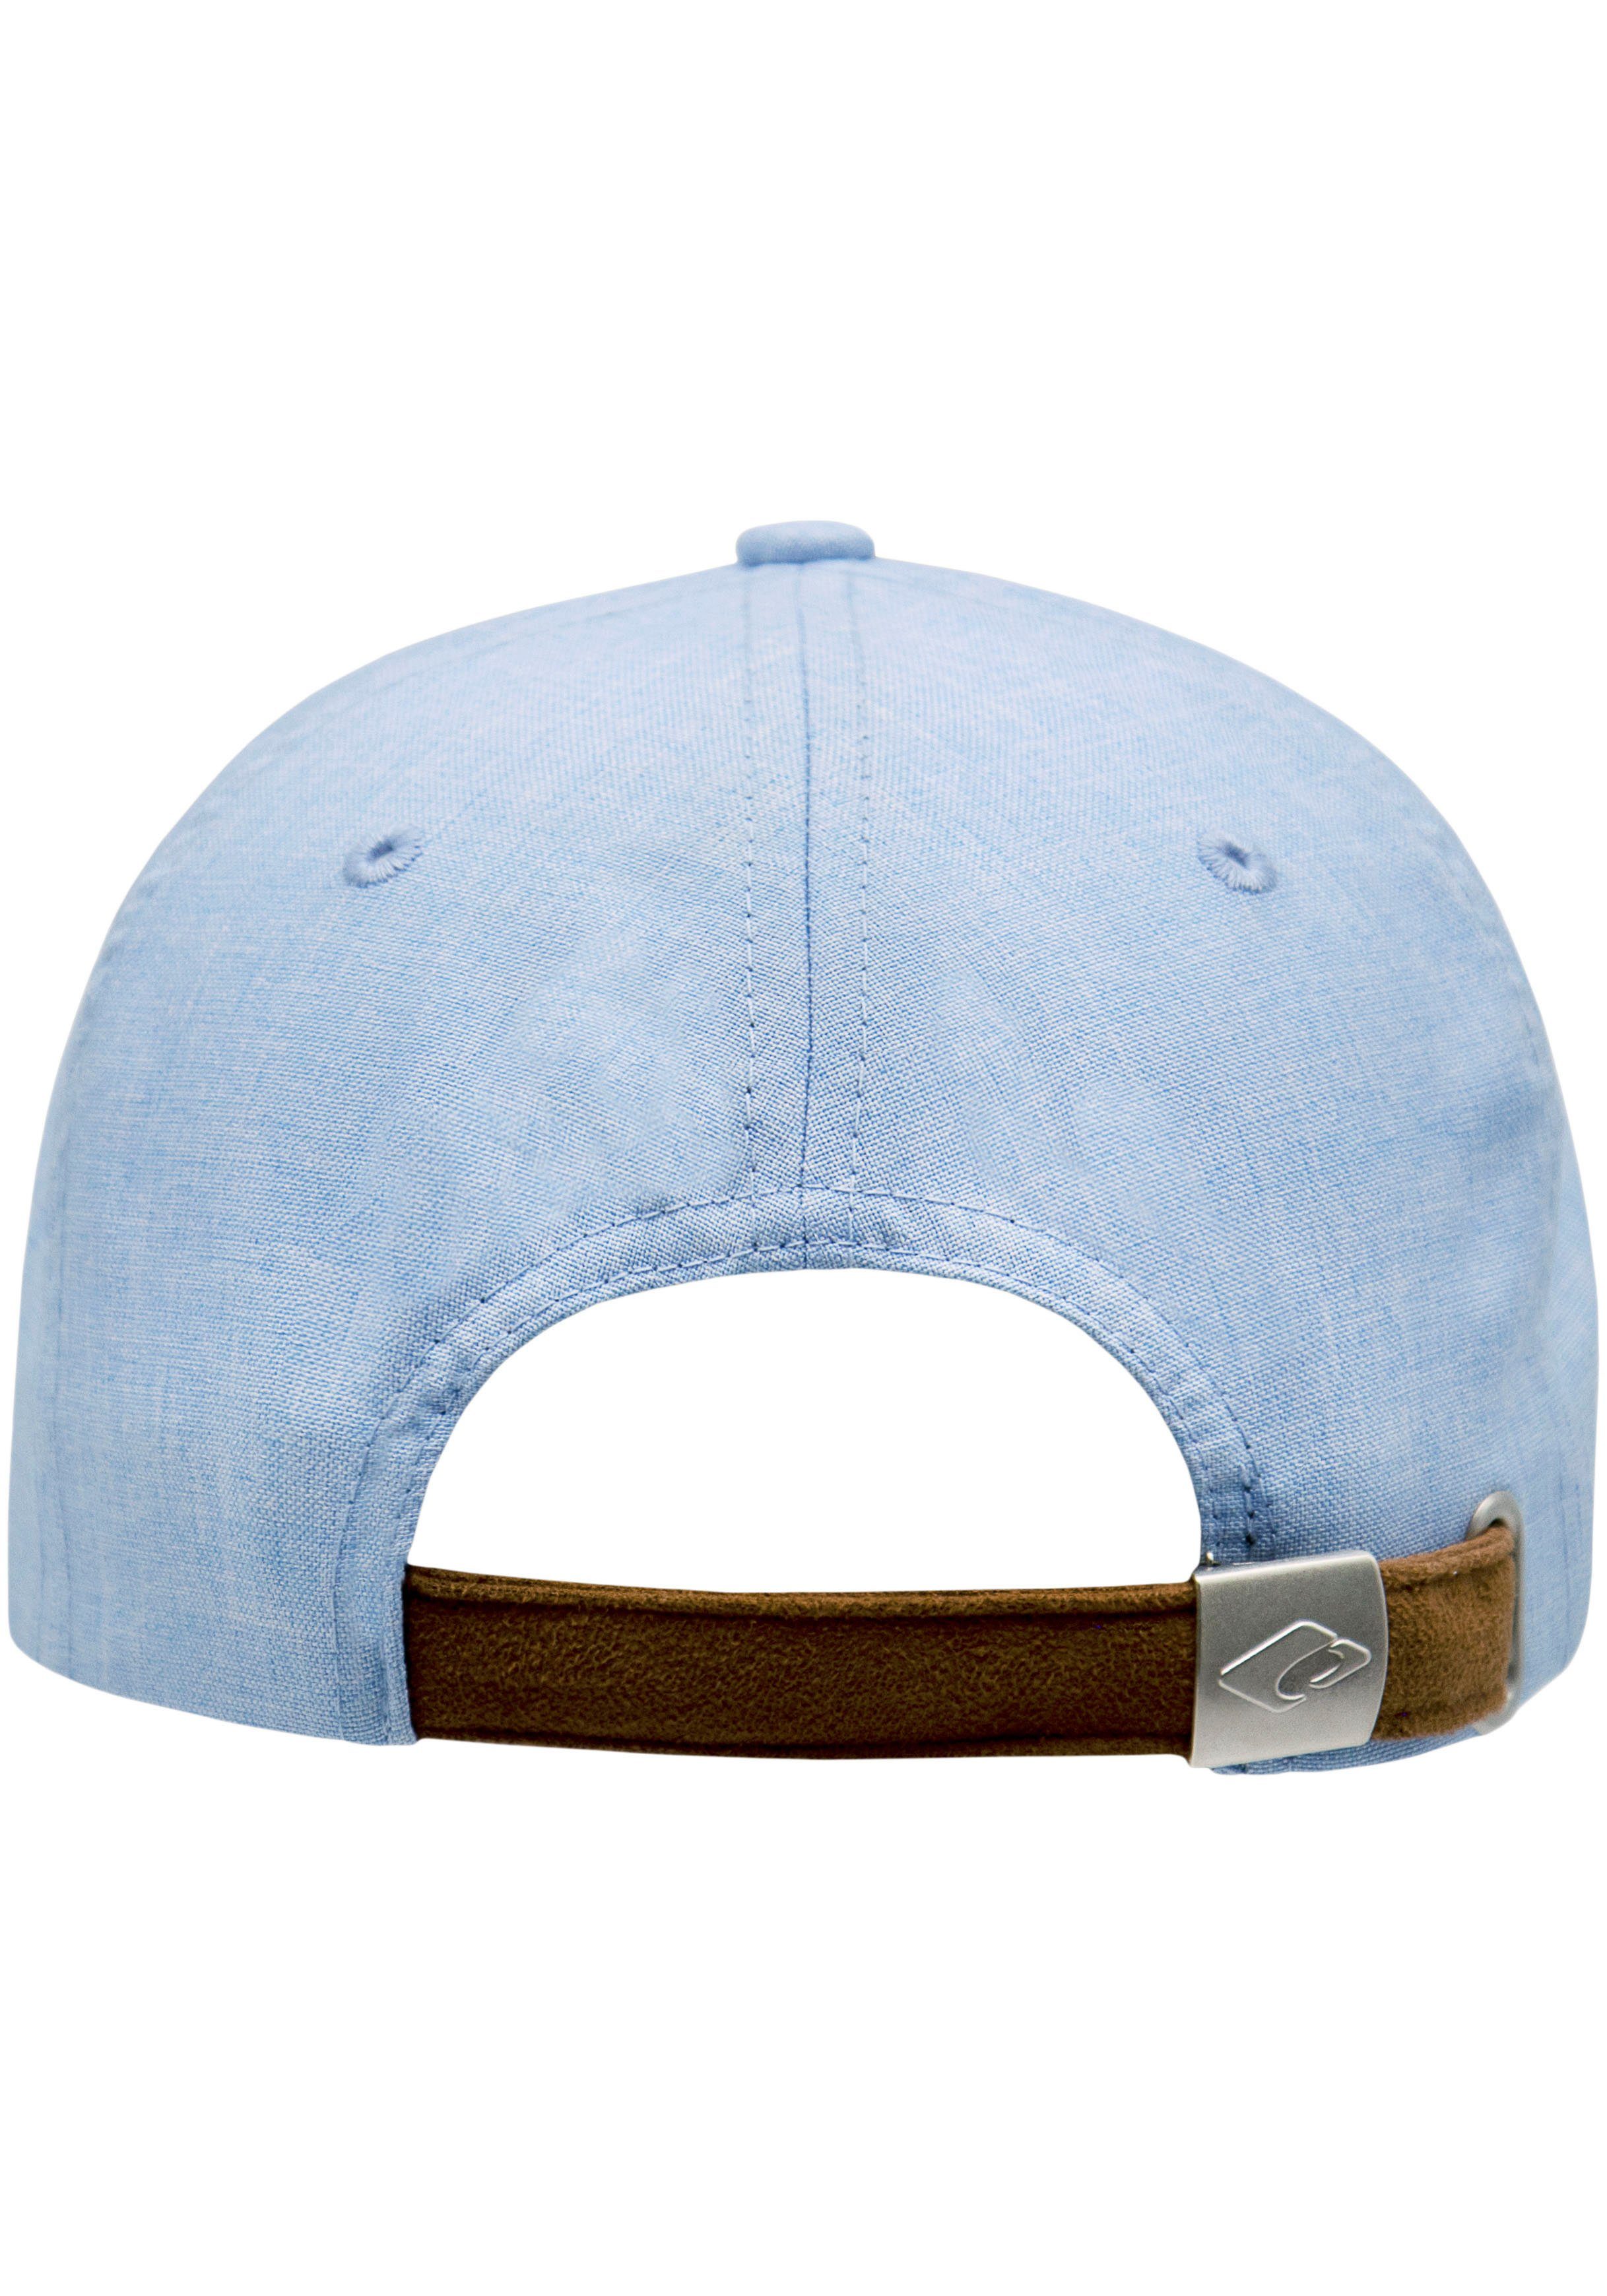 in One chillouts hellblau Optik, Hat Amadora Cap Size, melierter Baseball verstellbar